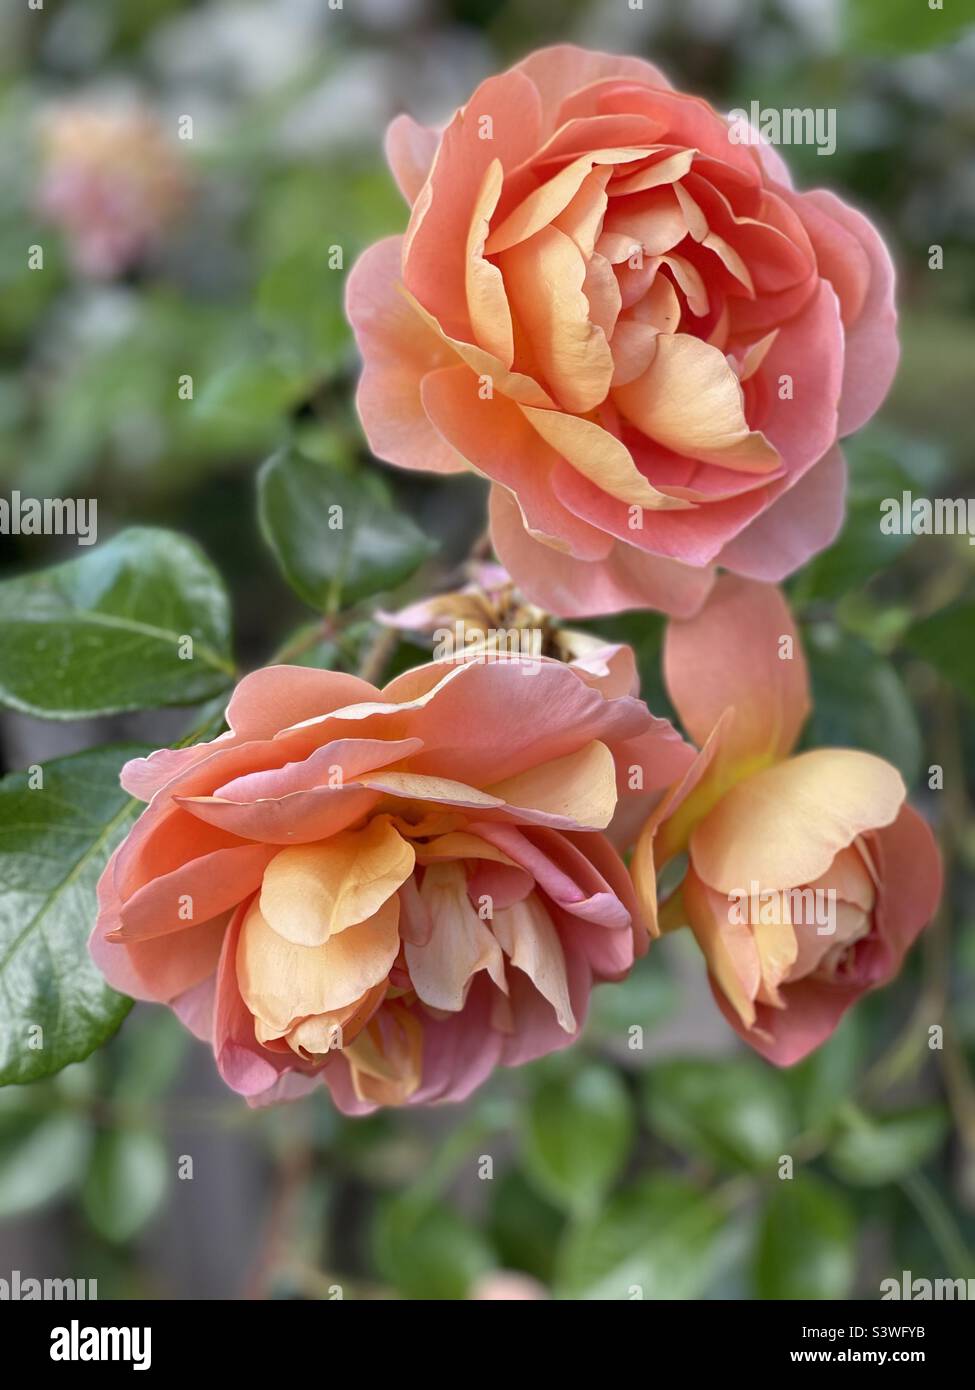 Magische Welt der Rosen - orange rosa Teerose Stockfoto